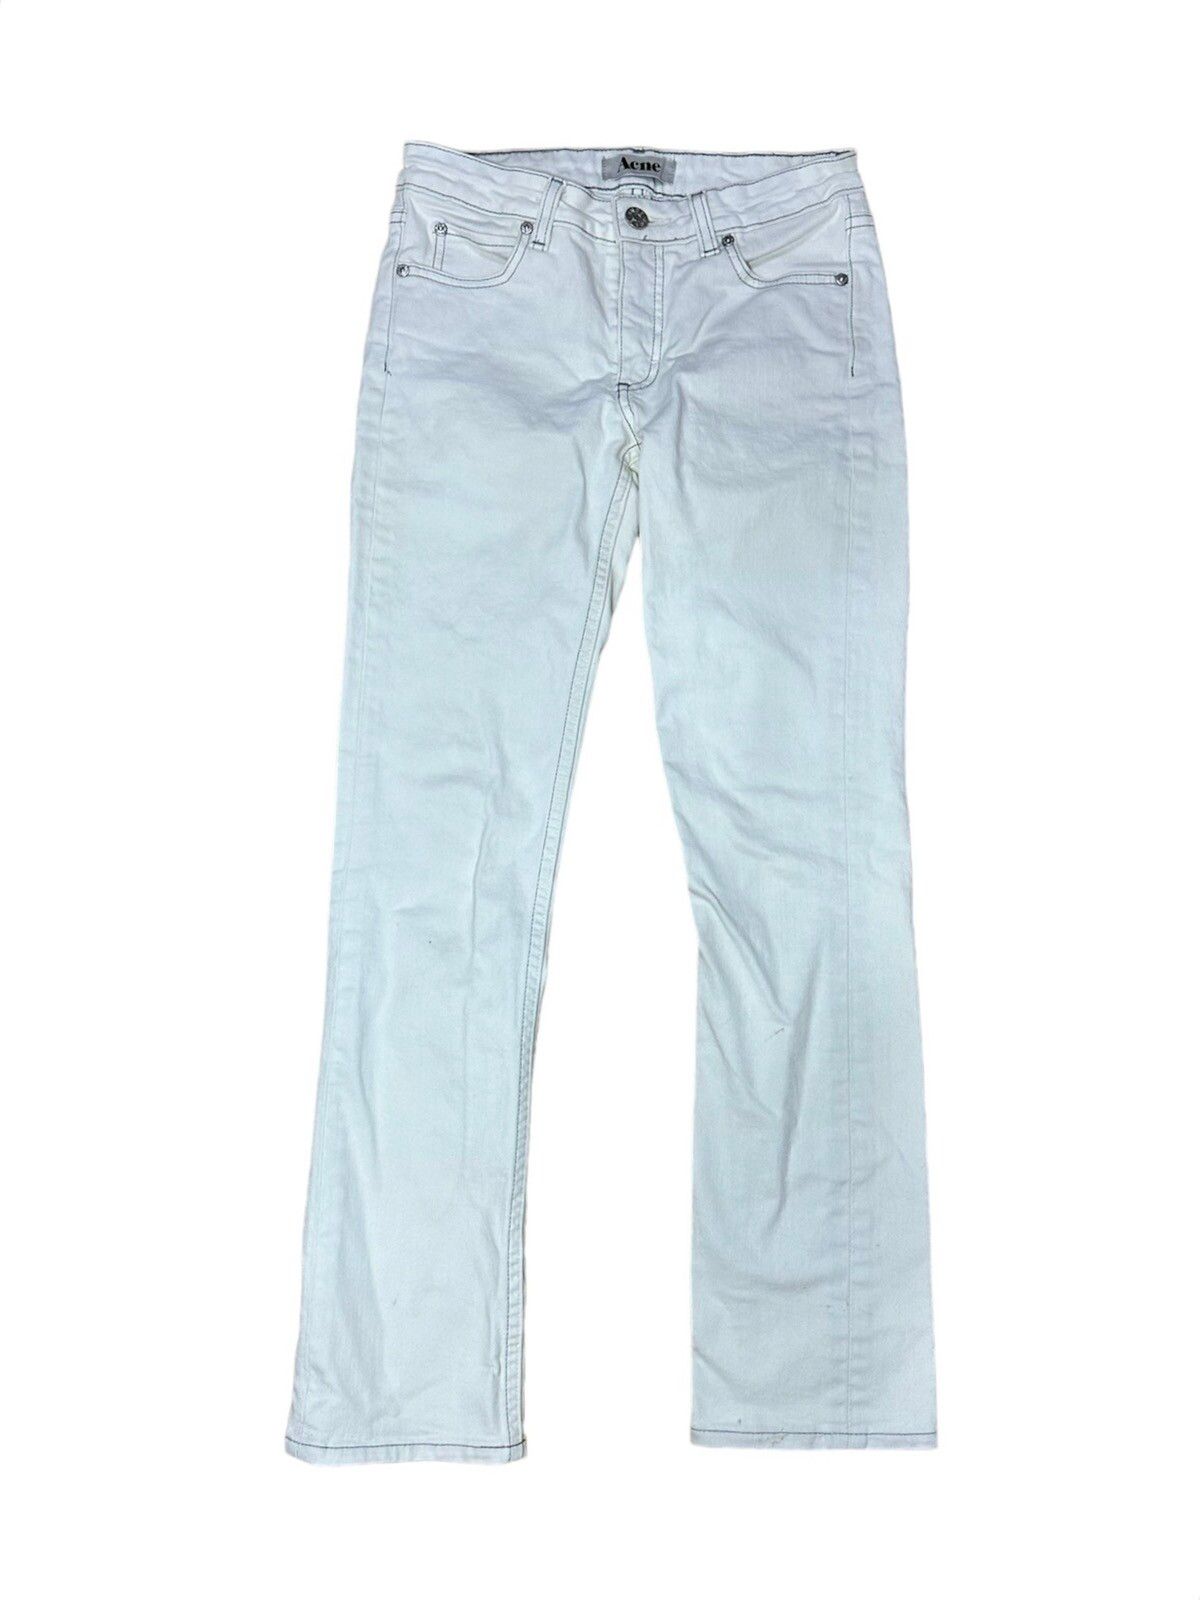 SS15 Acne Studios White Skinny Jeans - 1